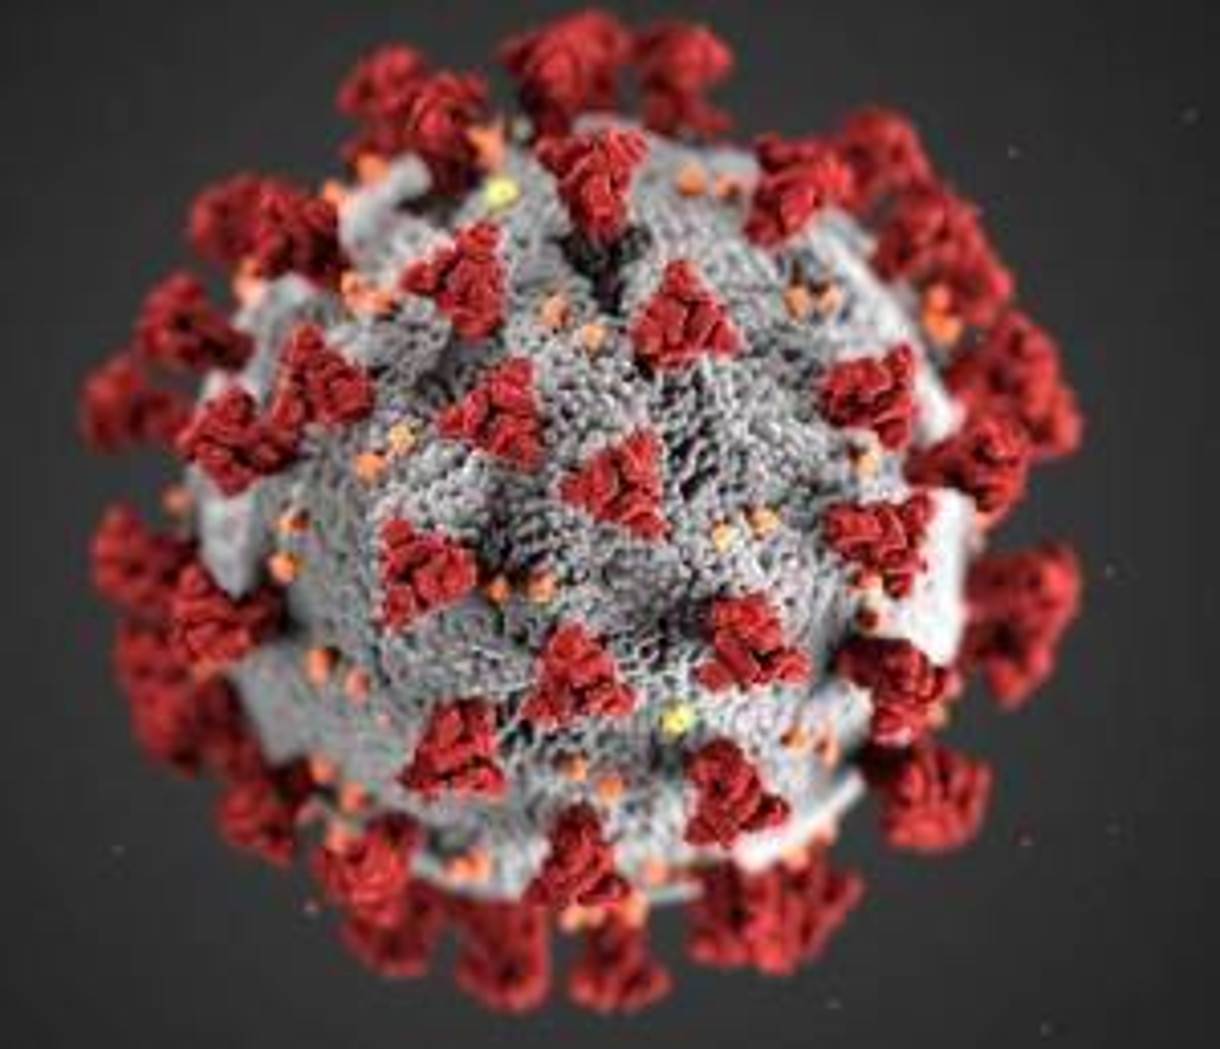 microscopic image of the coronavirus covid-19